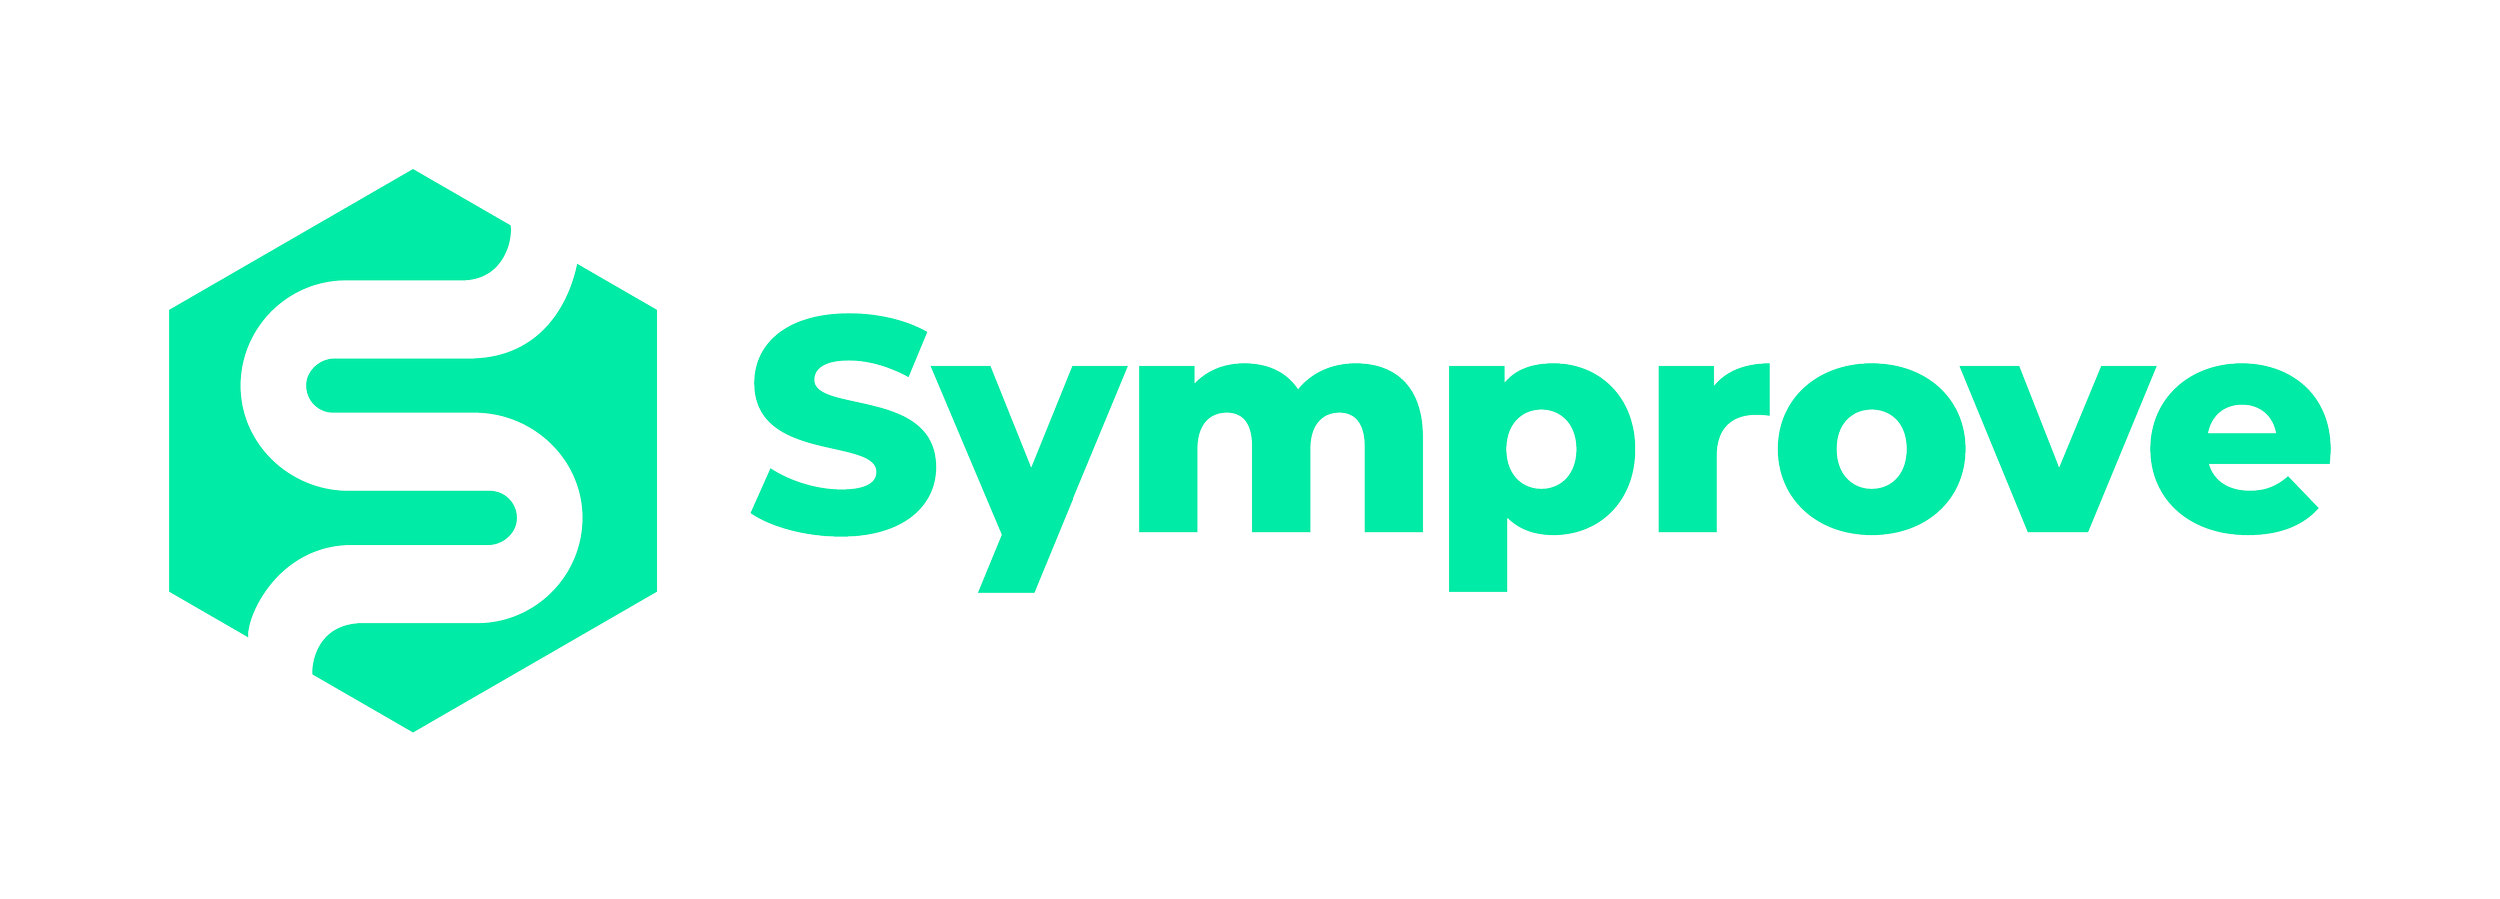 Symprove Master Primary Logo rgb Teal (1).png